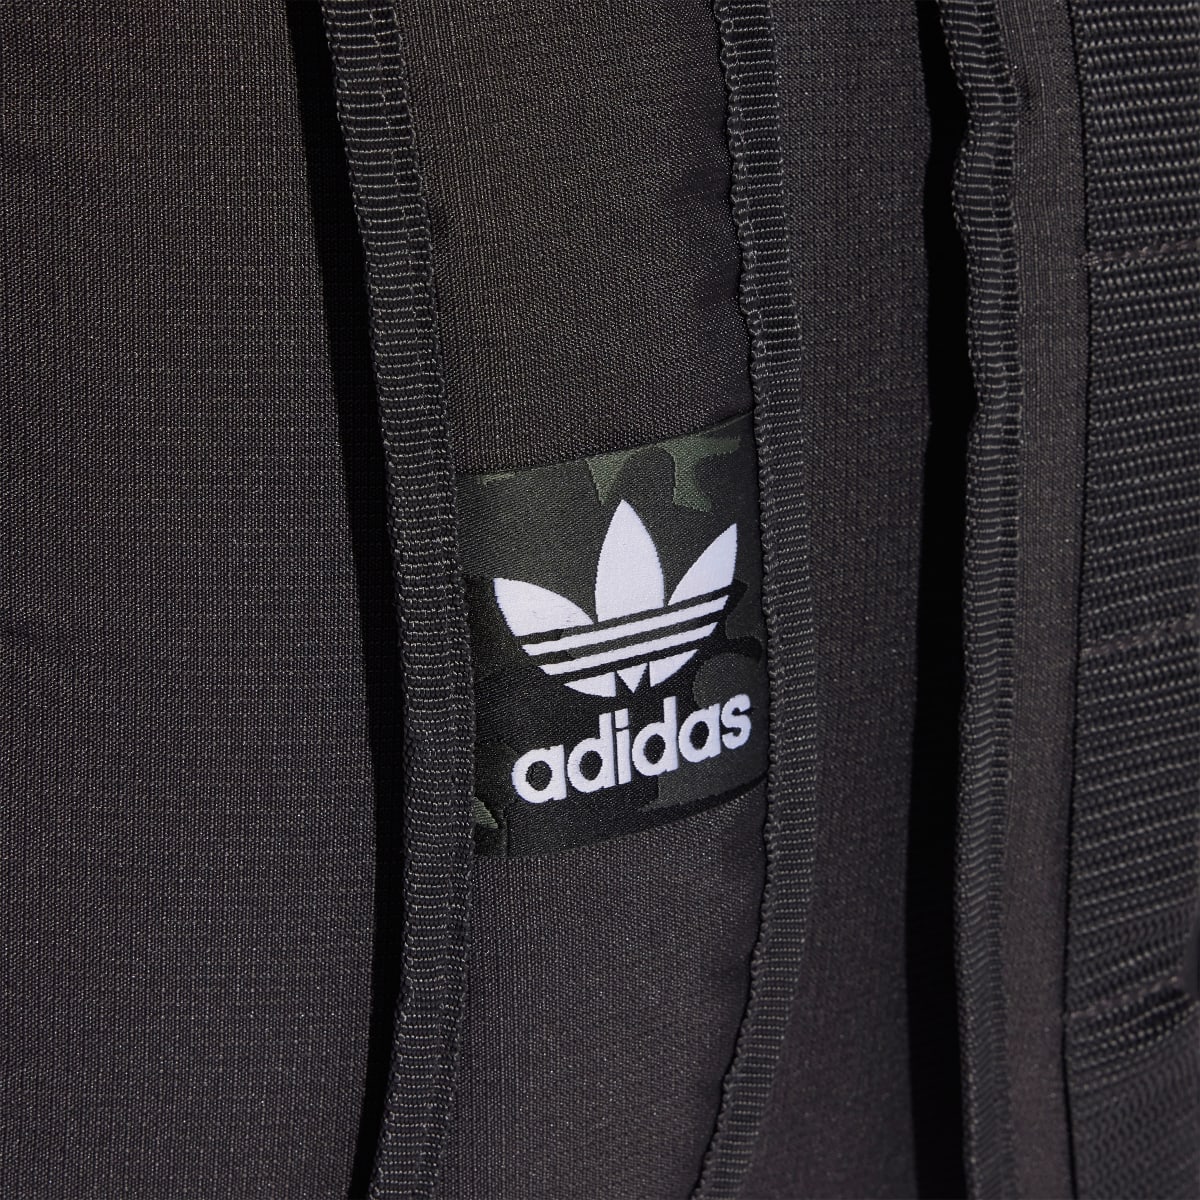 Adidas Camo Graphics Backpack. 5